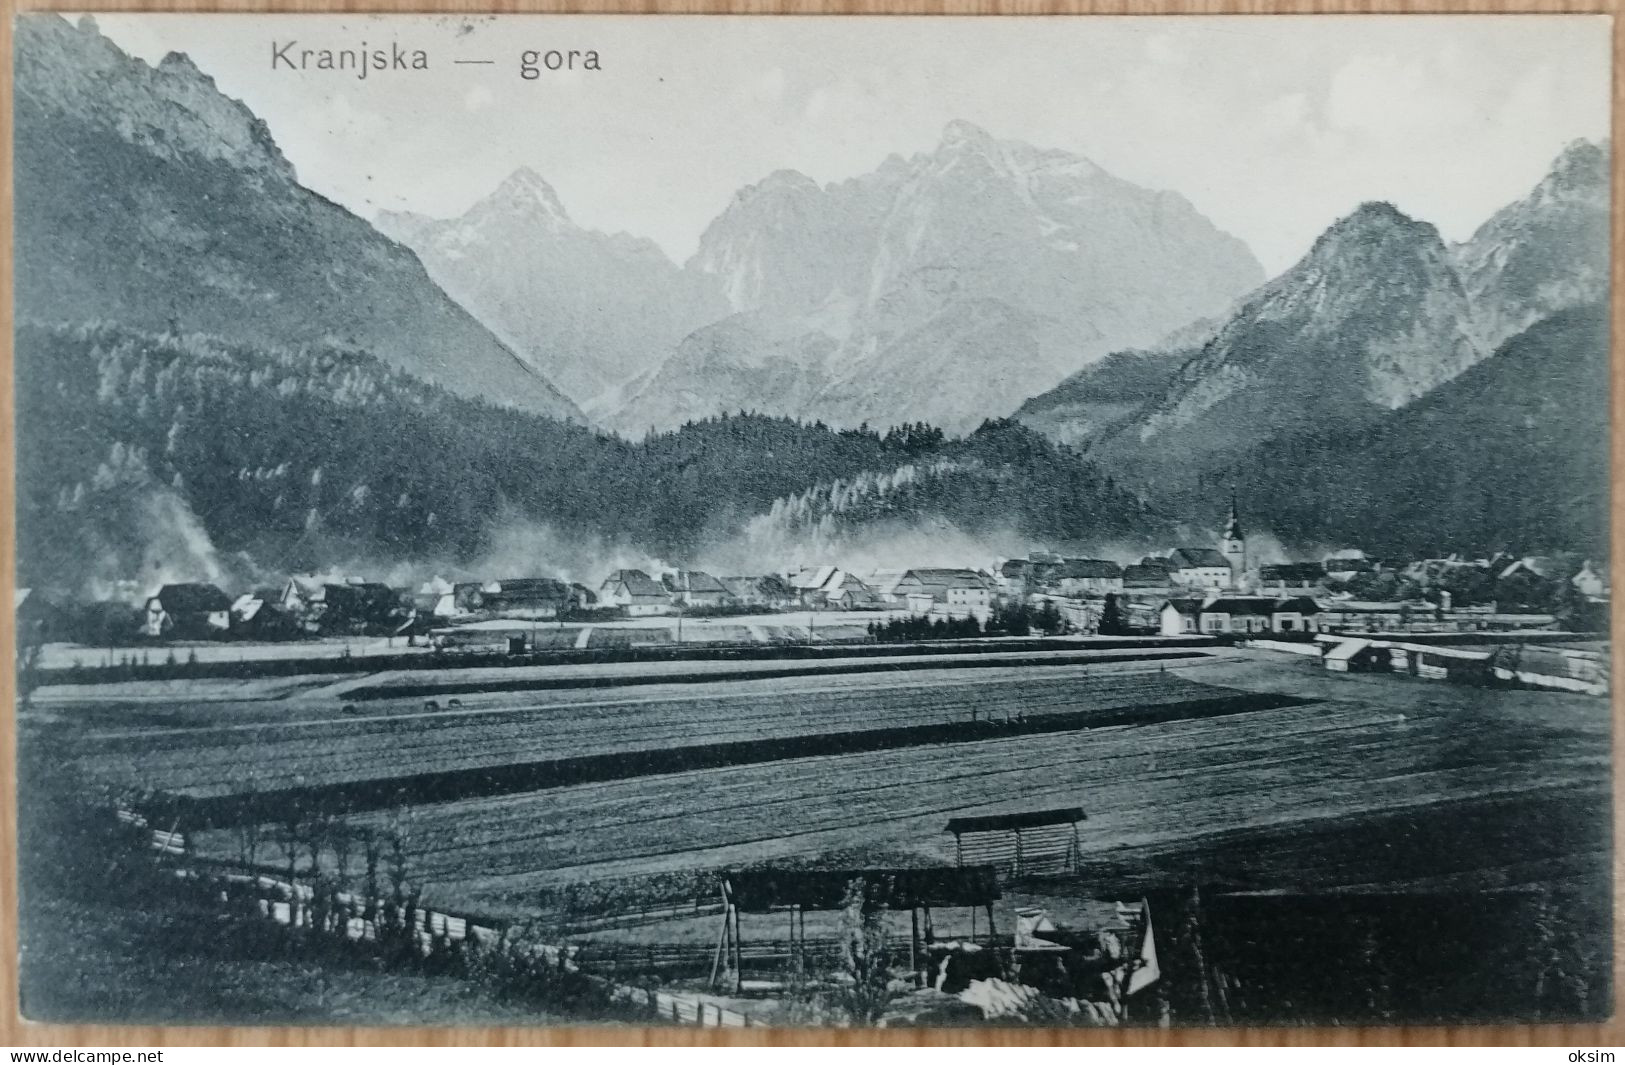 KRANJSKA GORA, 1912 - Slowenien